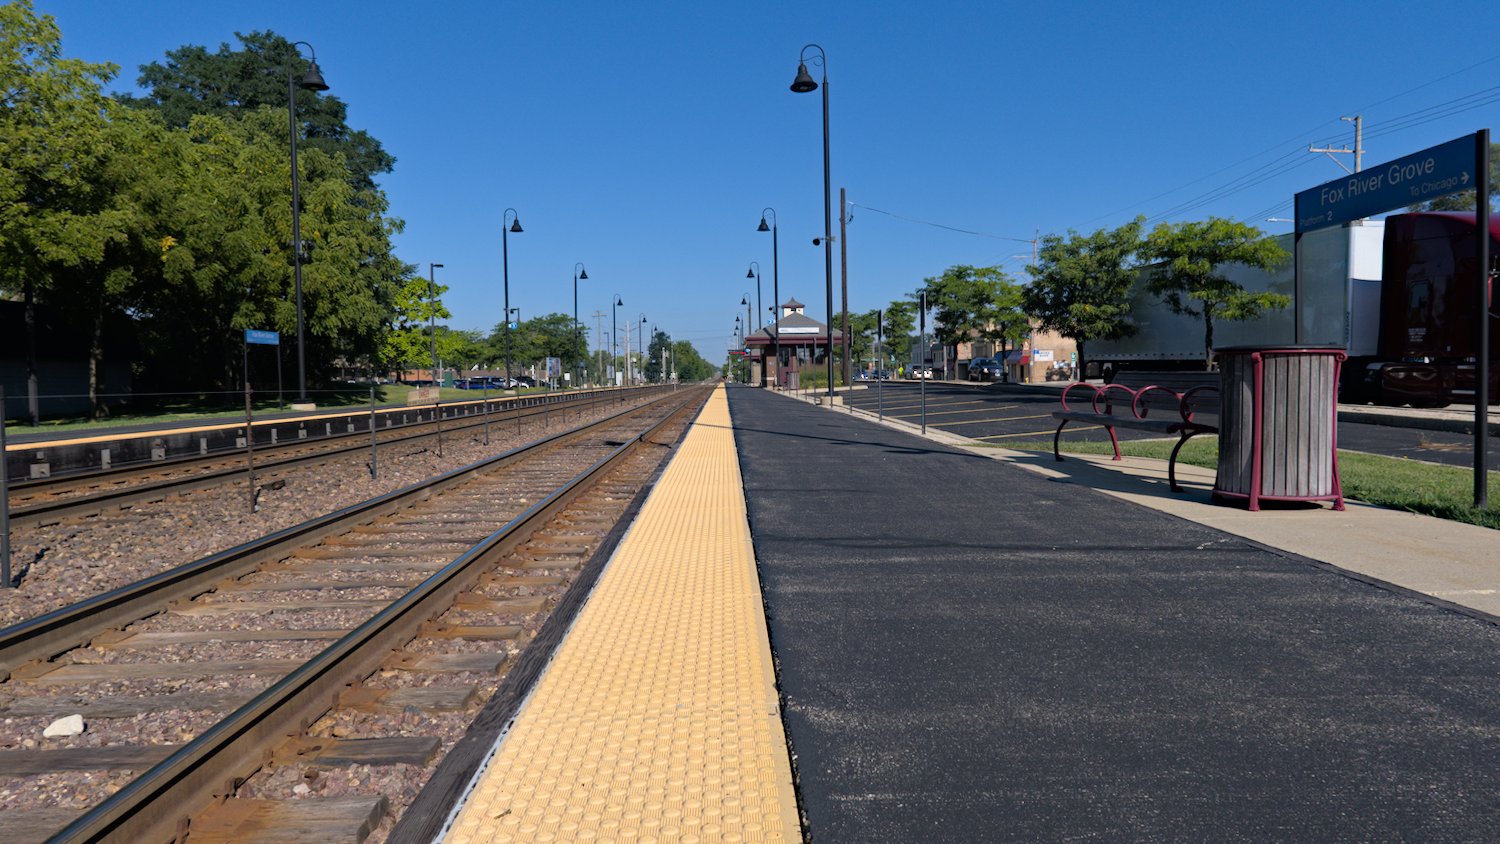 Inbound platform at the Fox River Grove Metra station.